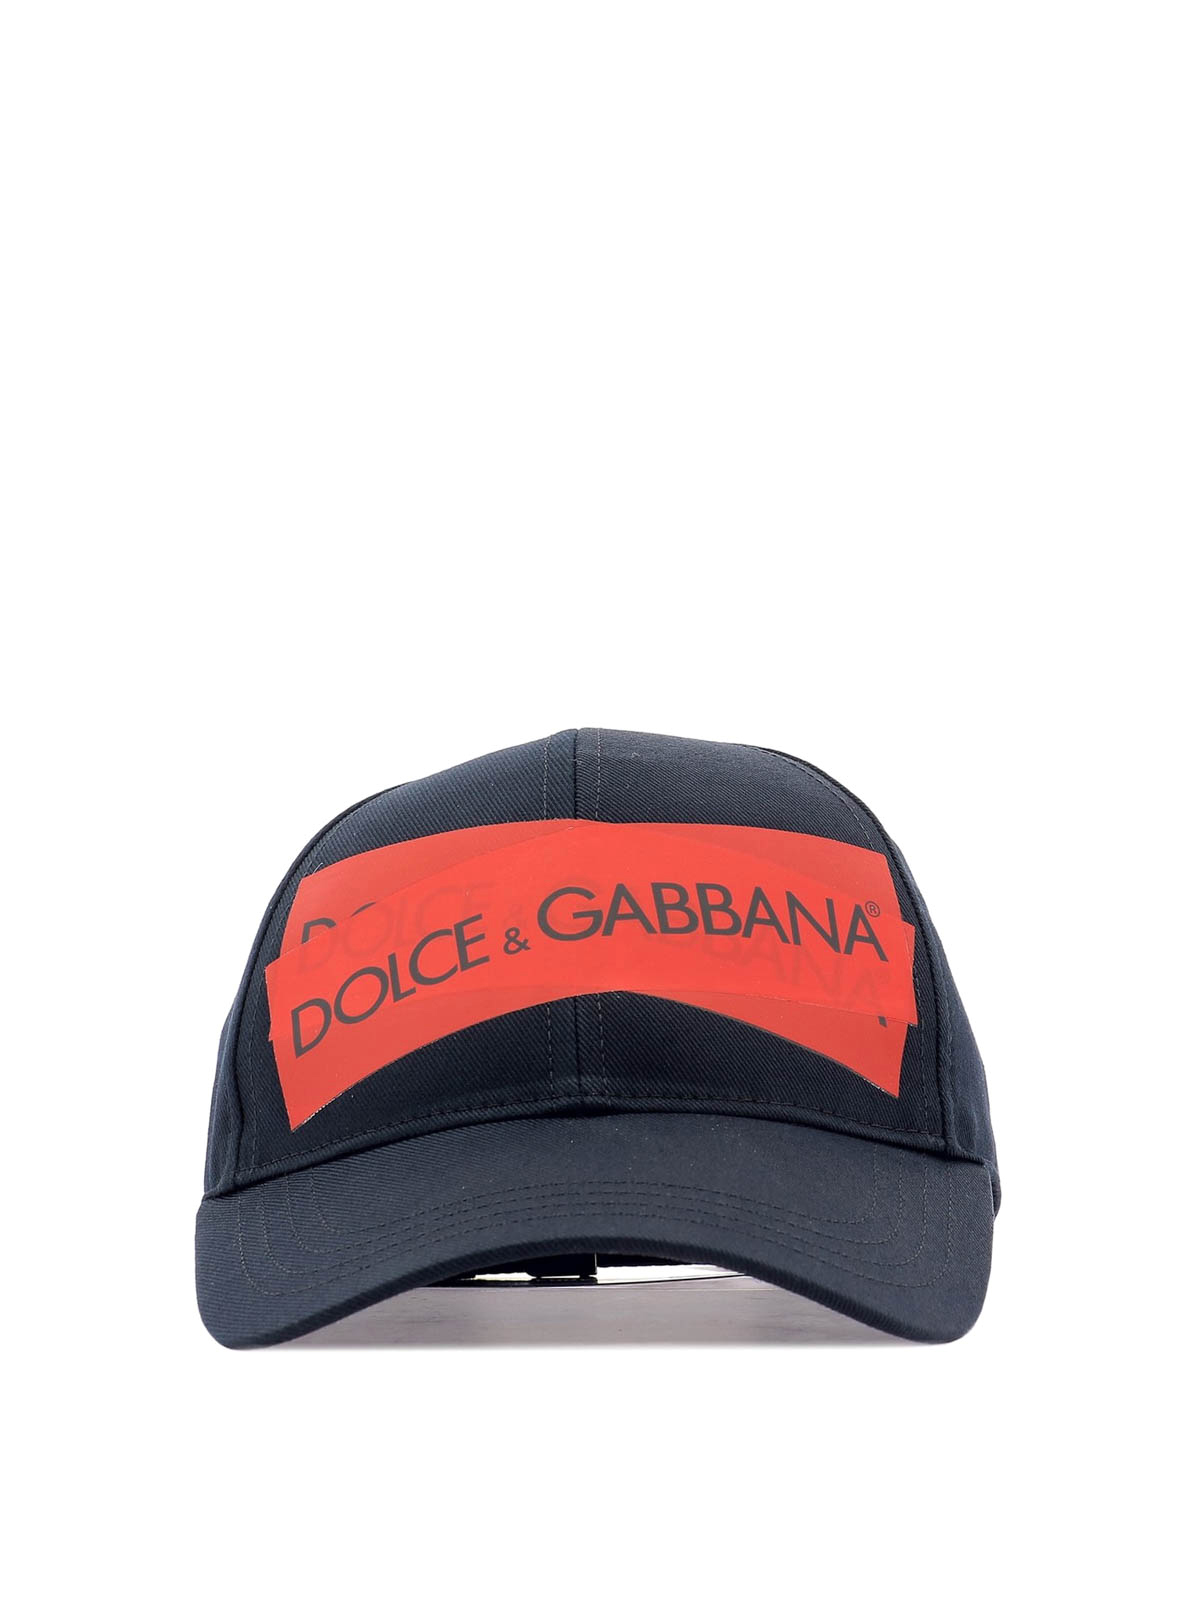 Ministerie bezoeker adelaar Hats & caps Dolce & Gabbana - Dark blue stretch cotton baseball cap -  GH590AGEF58B0665